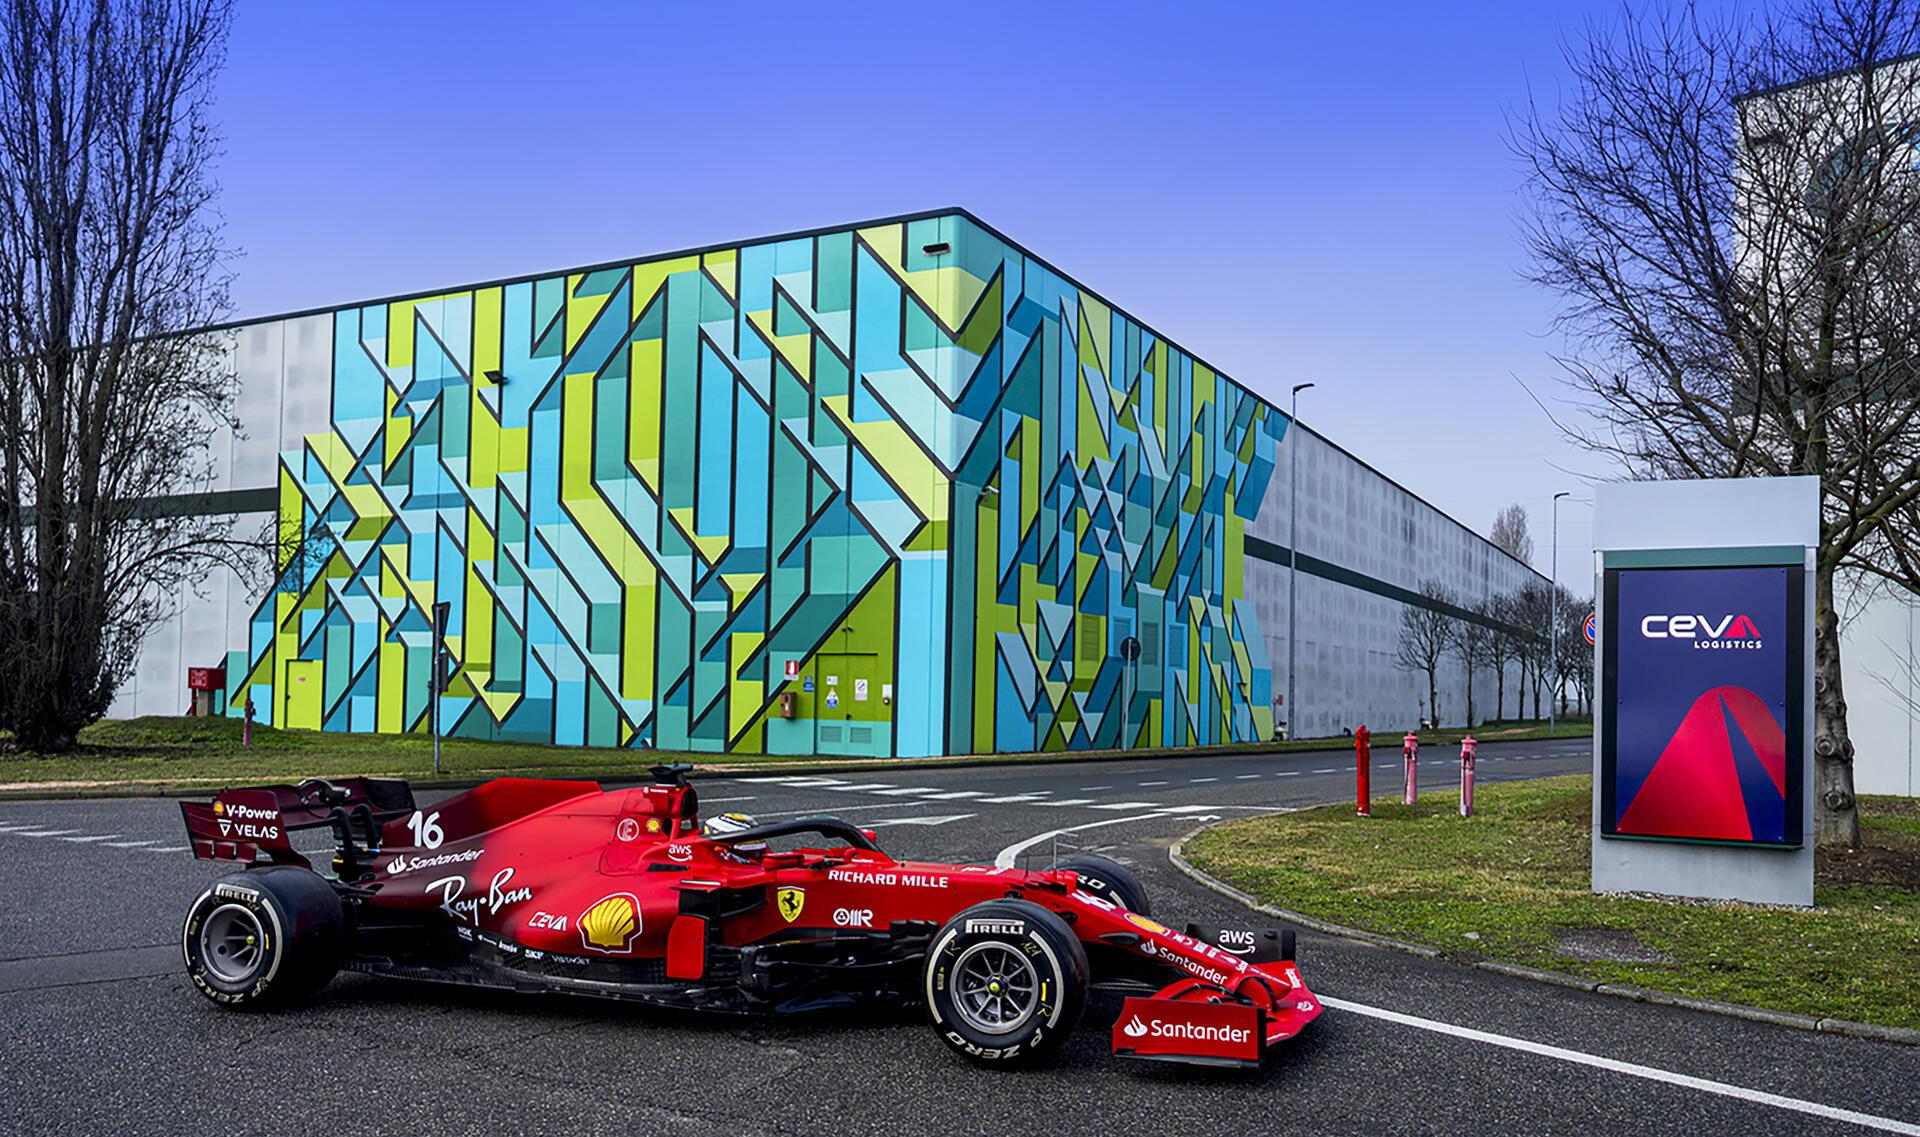 eBlue_economy_ Partnership with Scuderia Ferrari providing logistics support for Ferrari racing activities